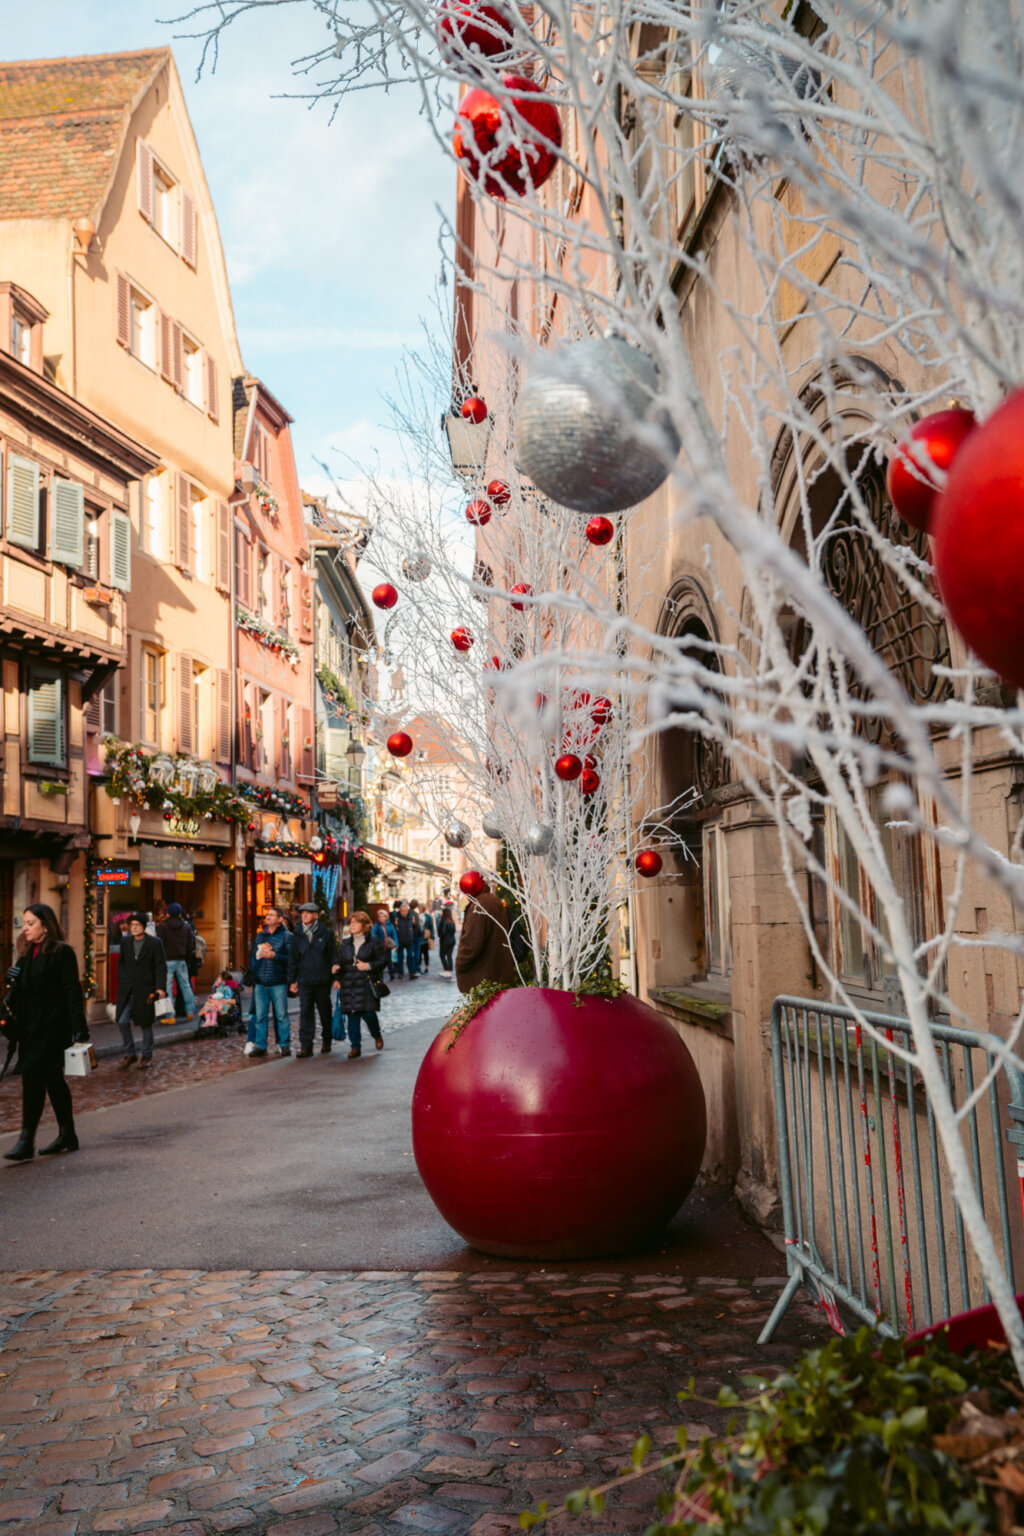 Strasbourg Christmas Market 2021 Dates